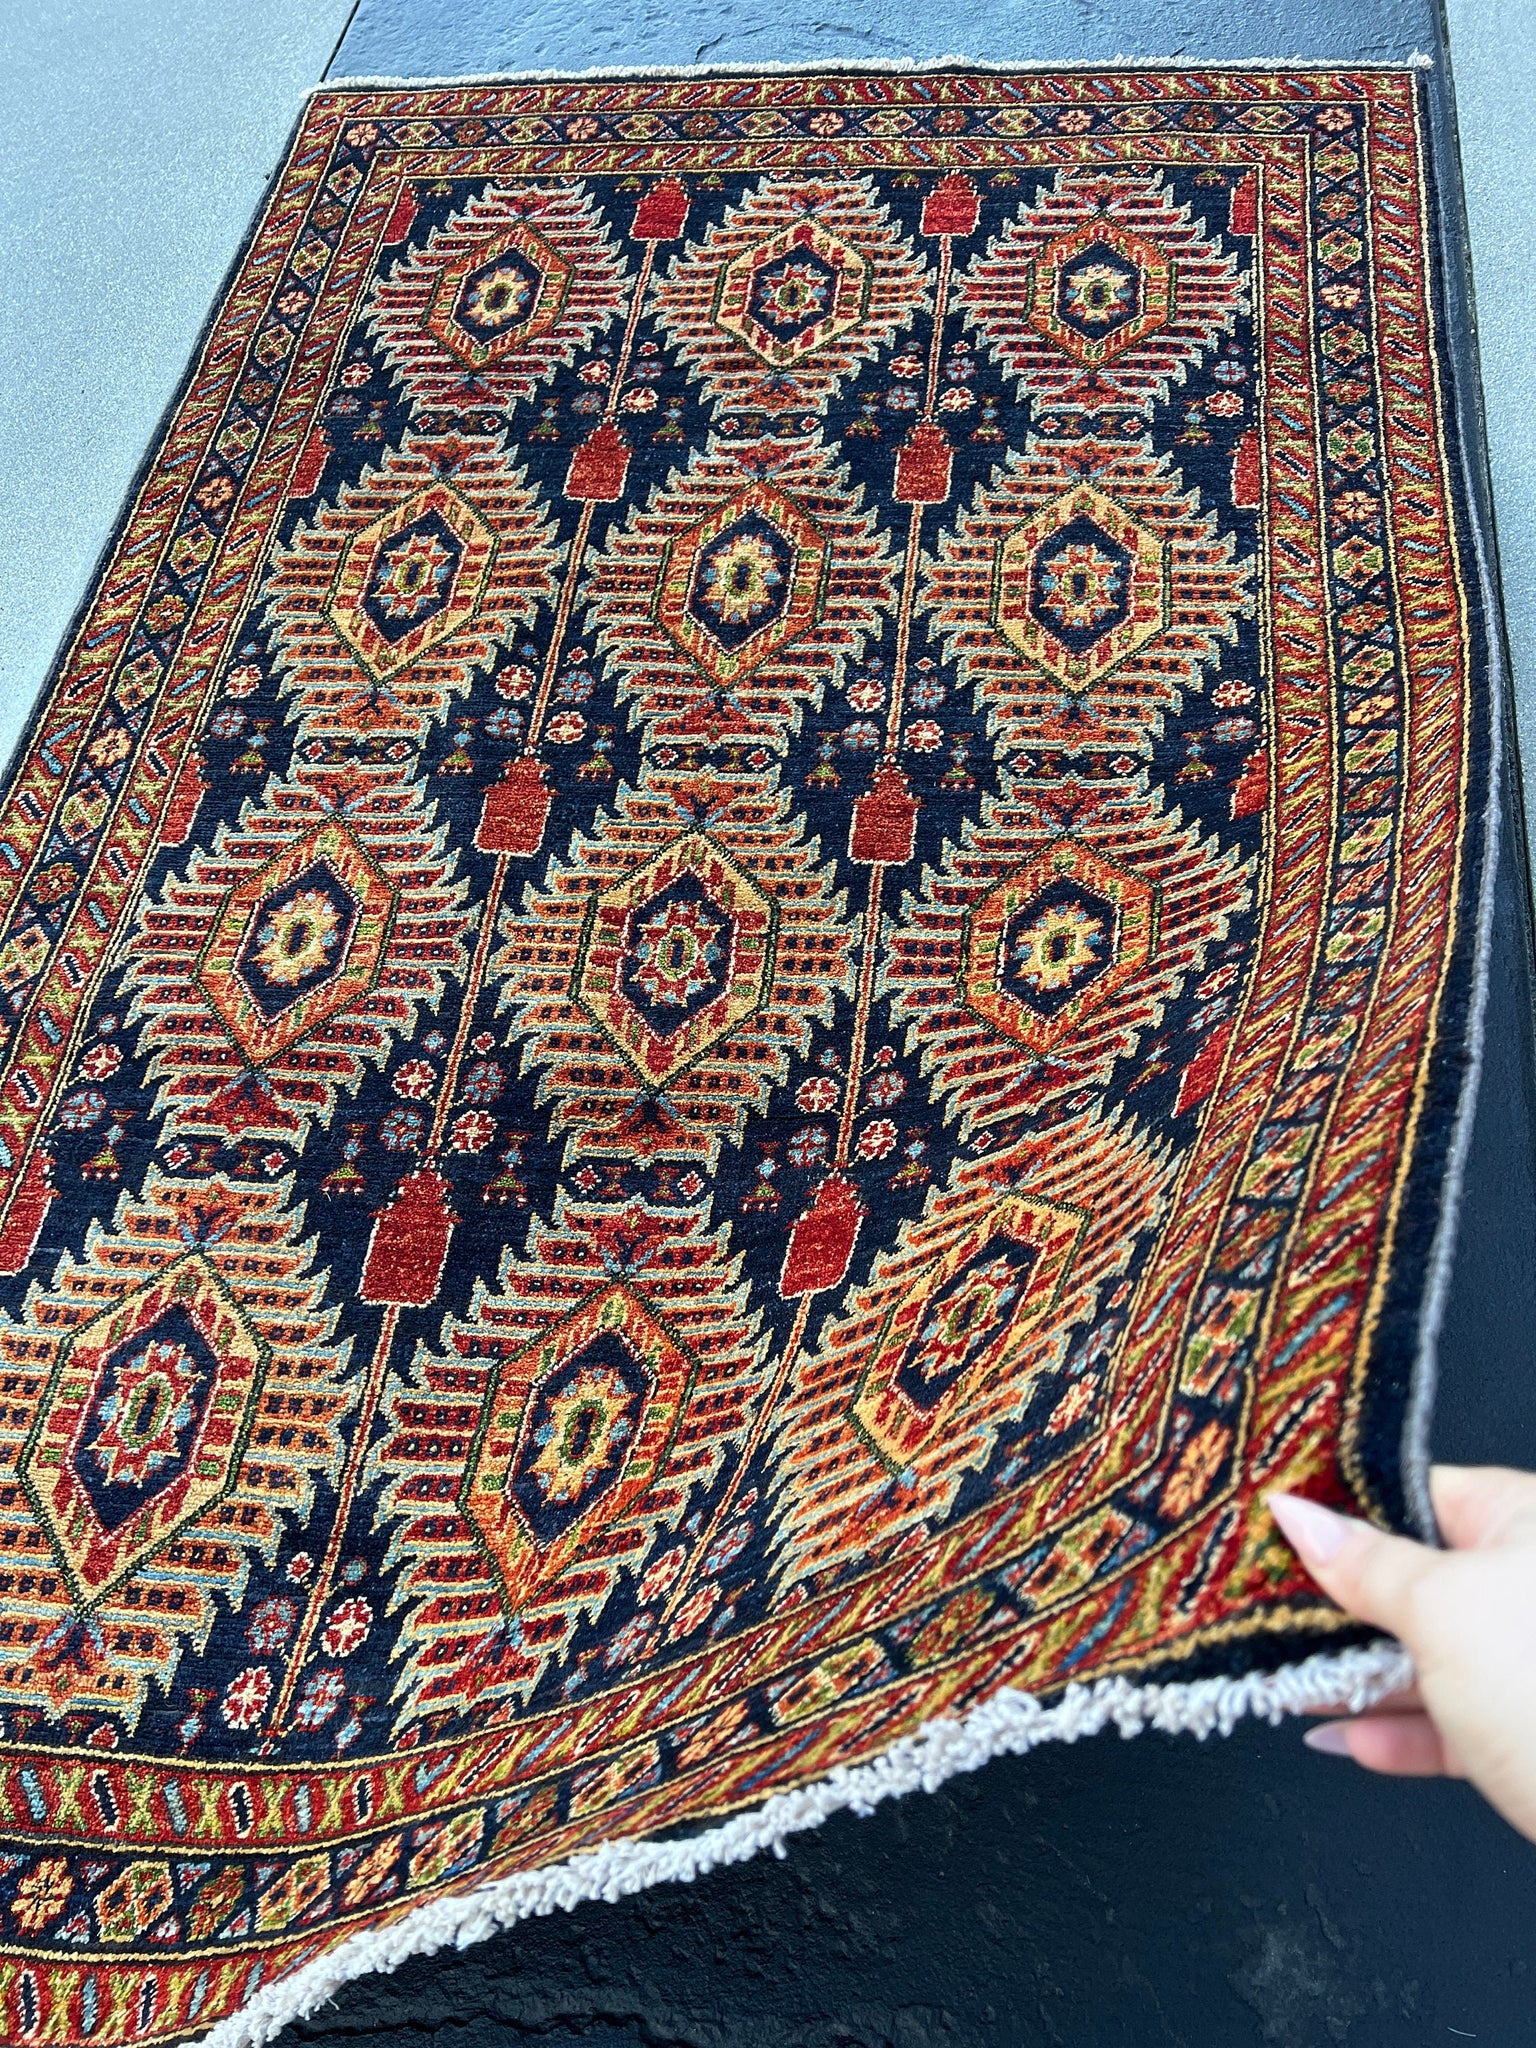 Geometric Red Traditional Handmade Small Rug 3x4 Tribal Carpet